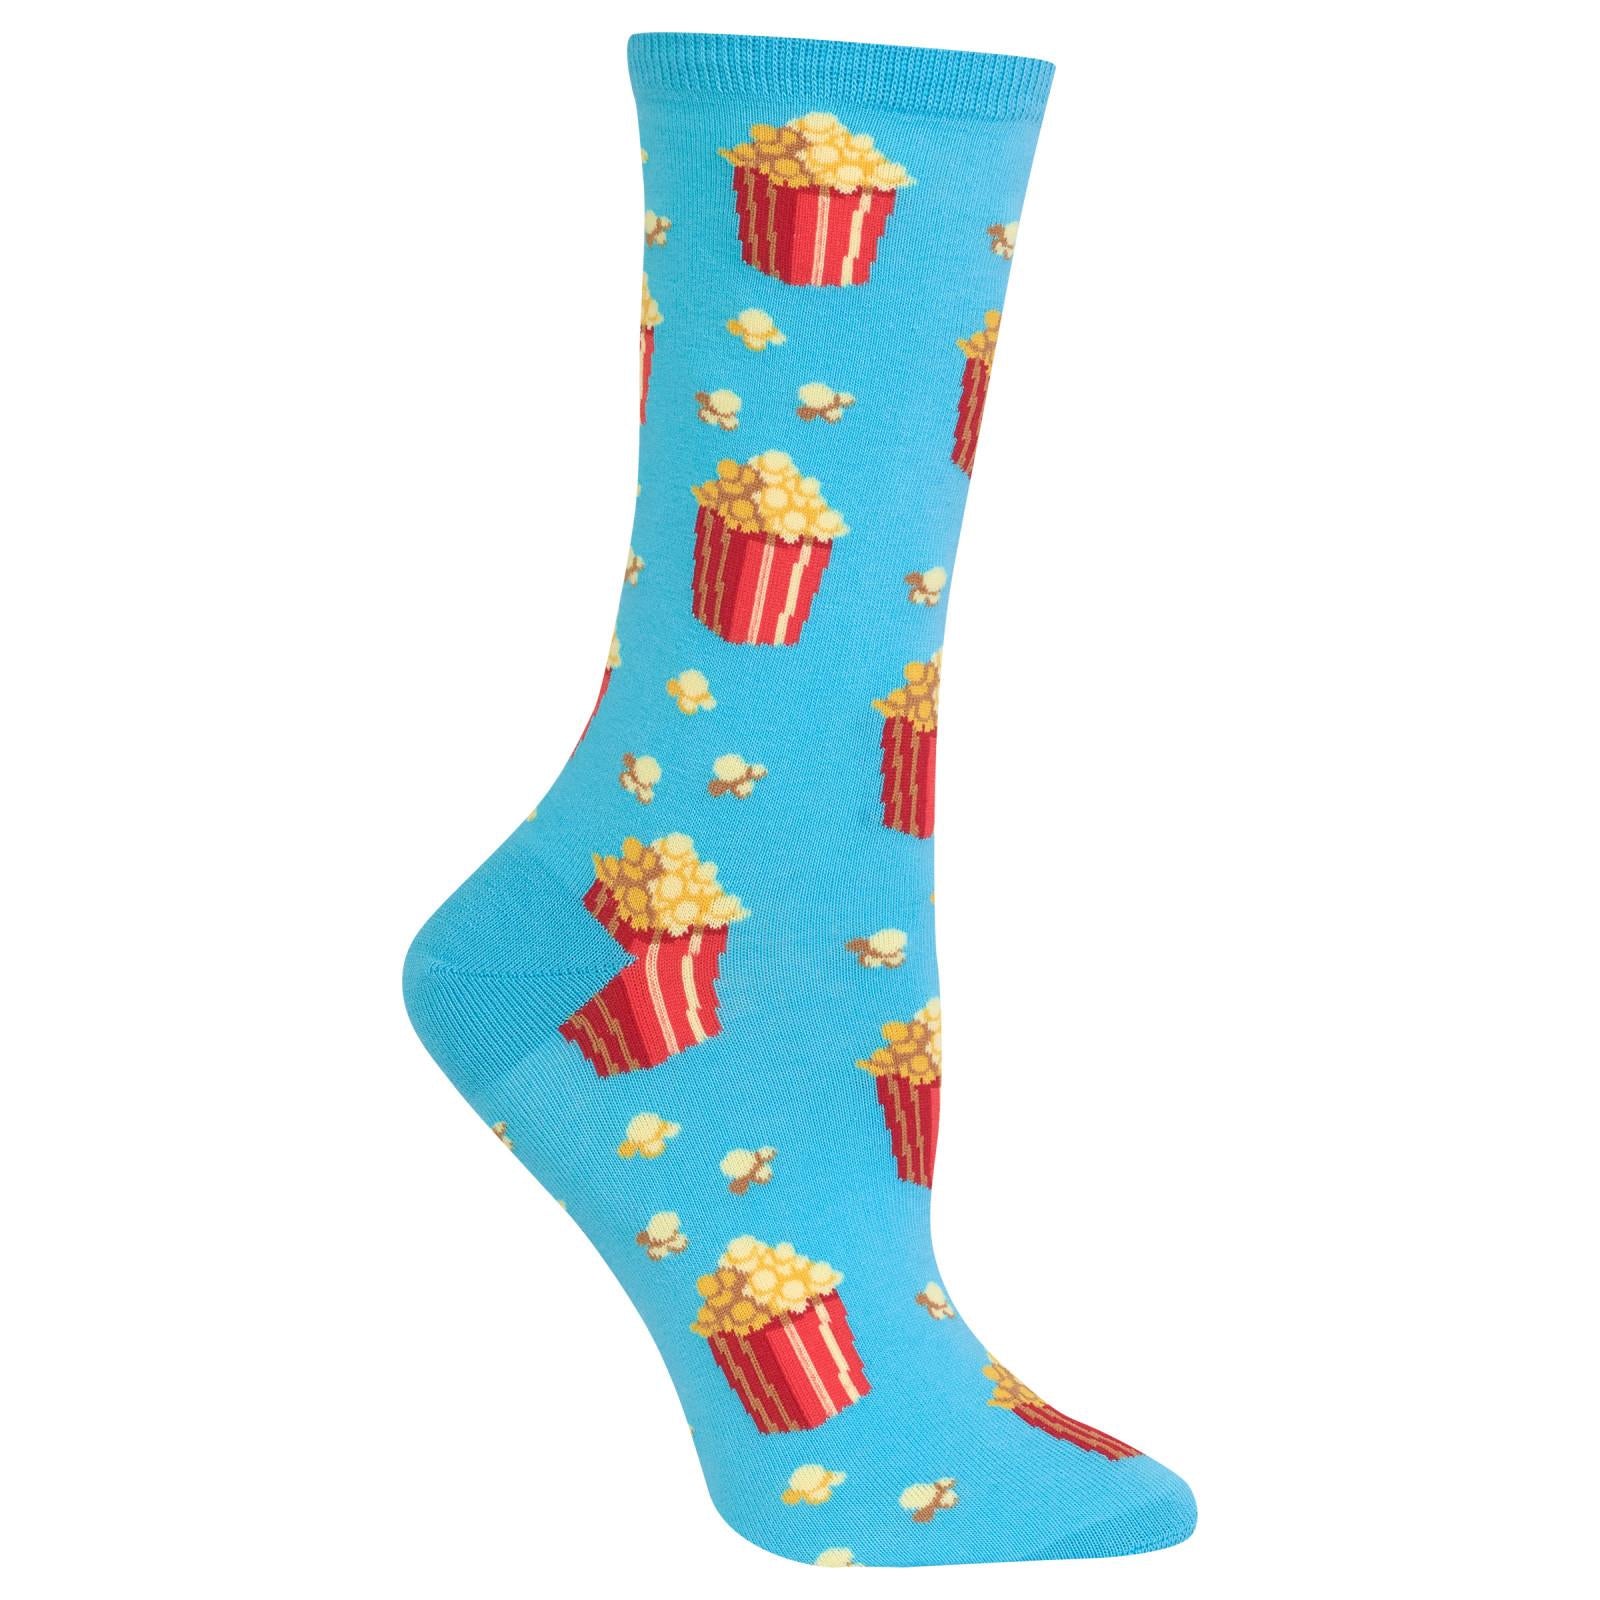 Popcorn Socks (Adult Medium)